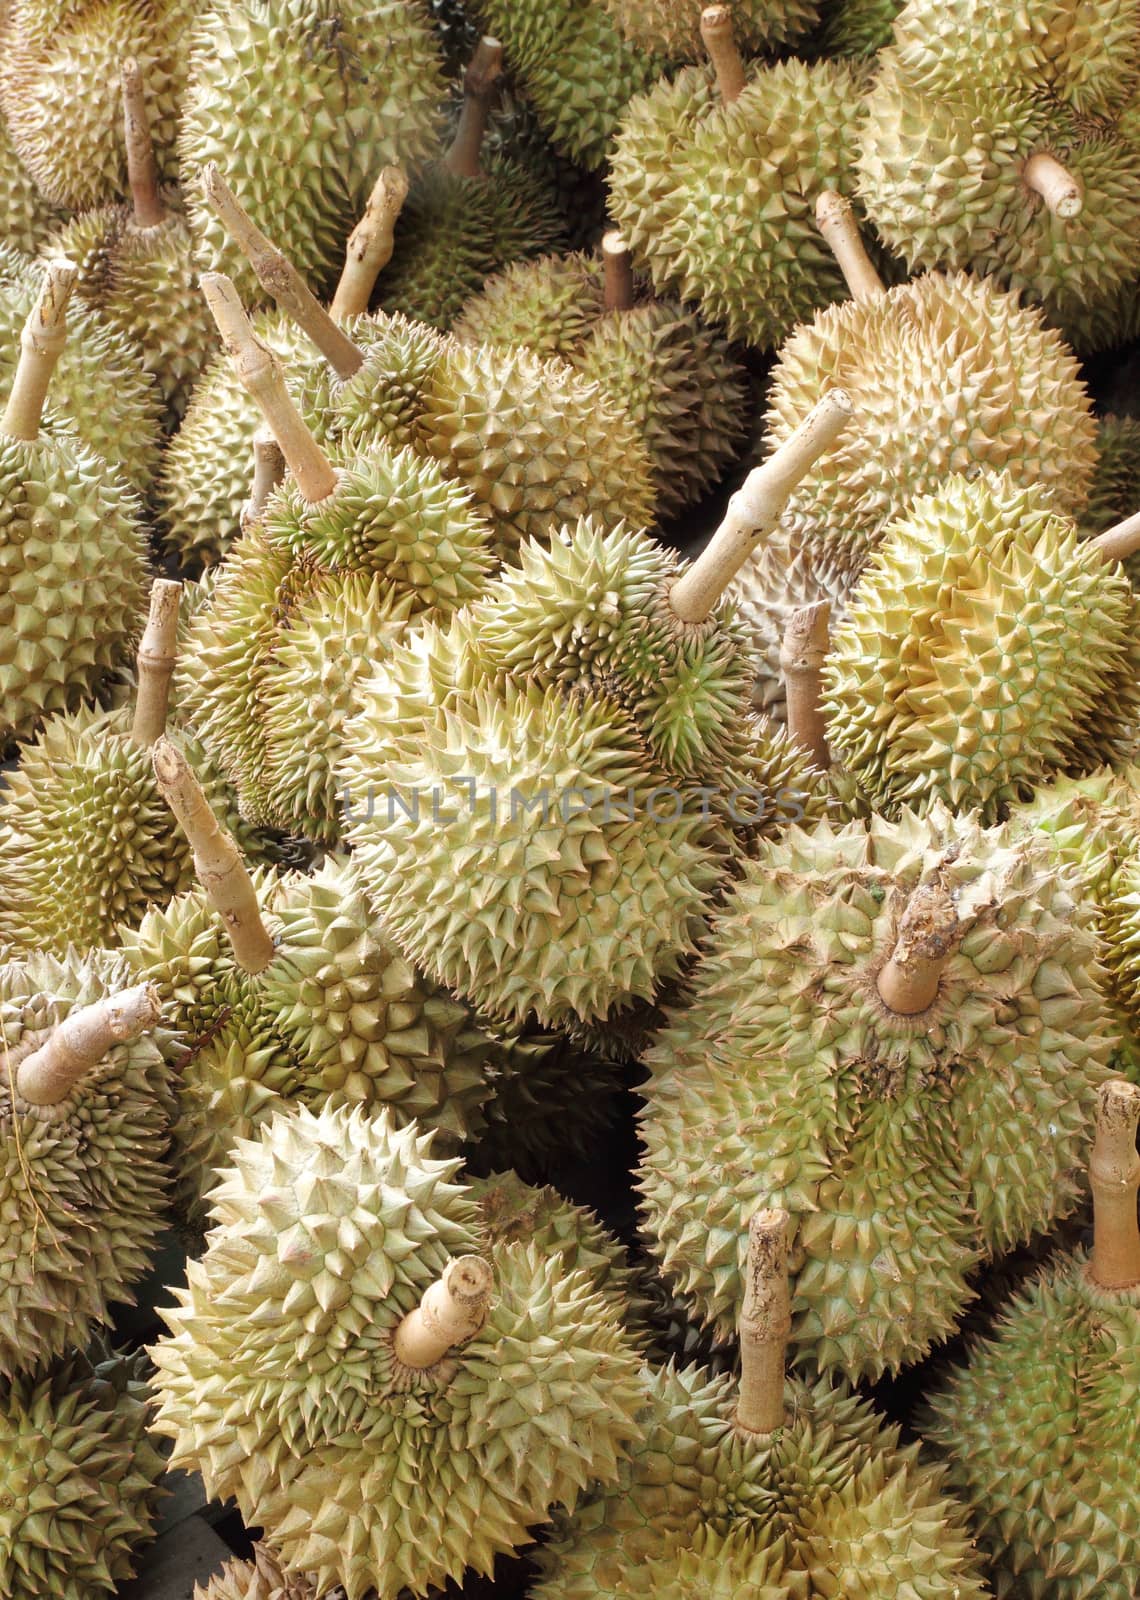 durian, king of fruit by geargodz